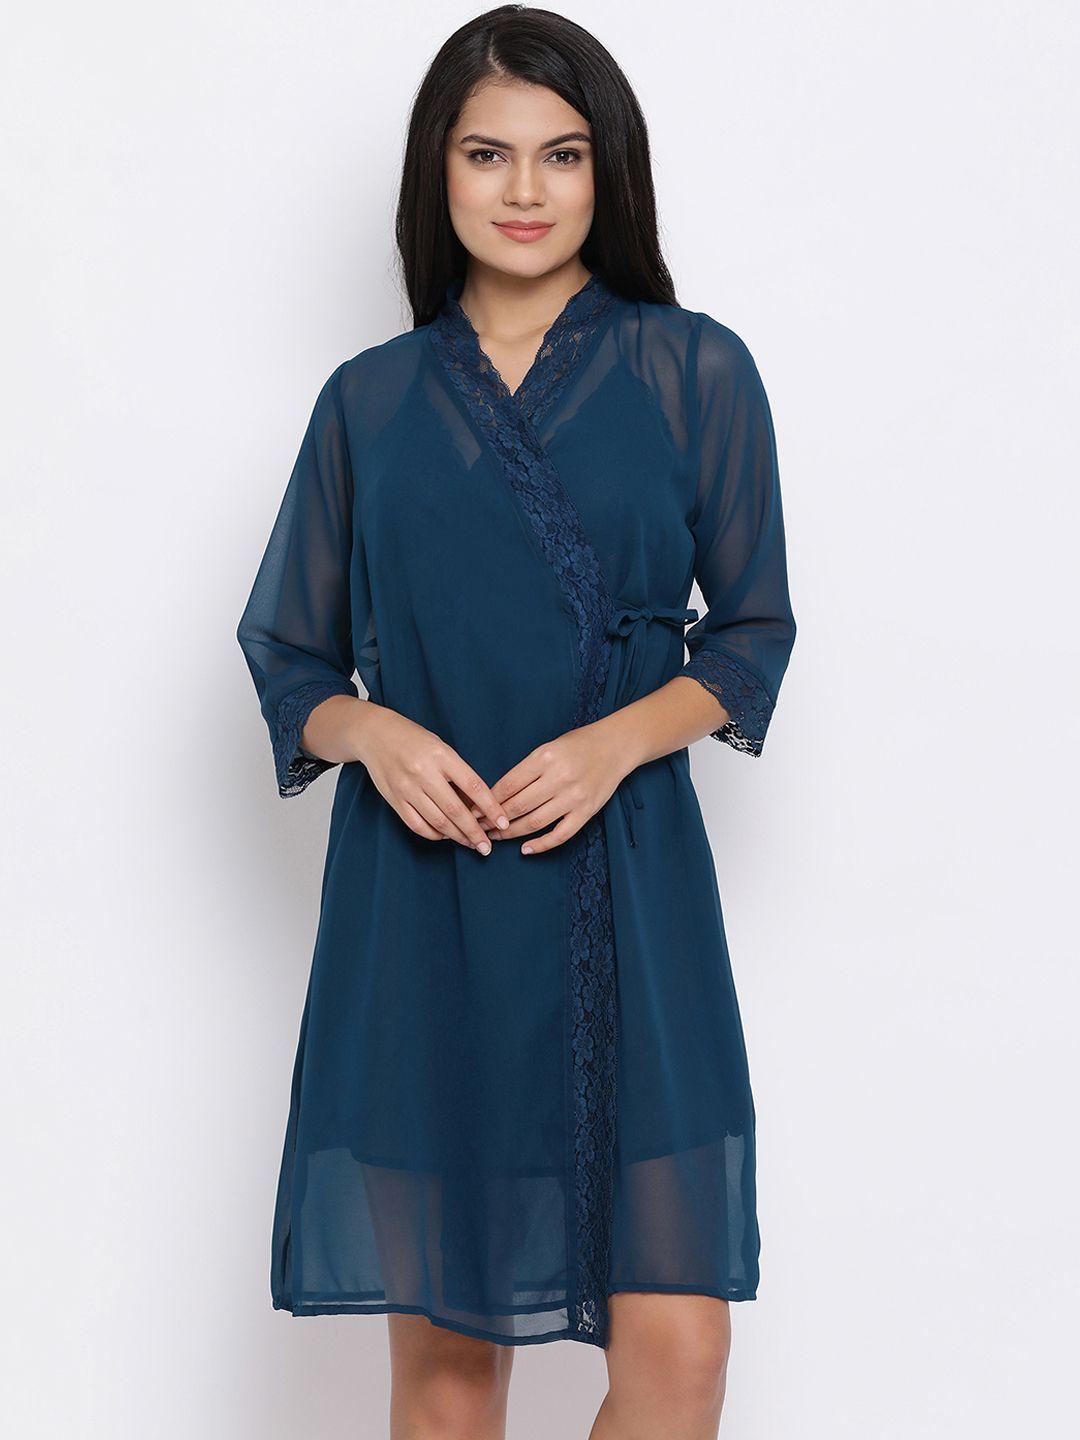 clovia-women-navy-blue-solid-lace-sheer-short-robe